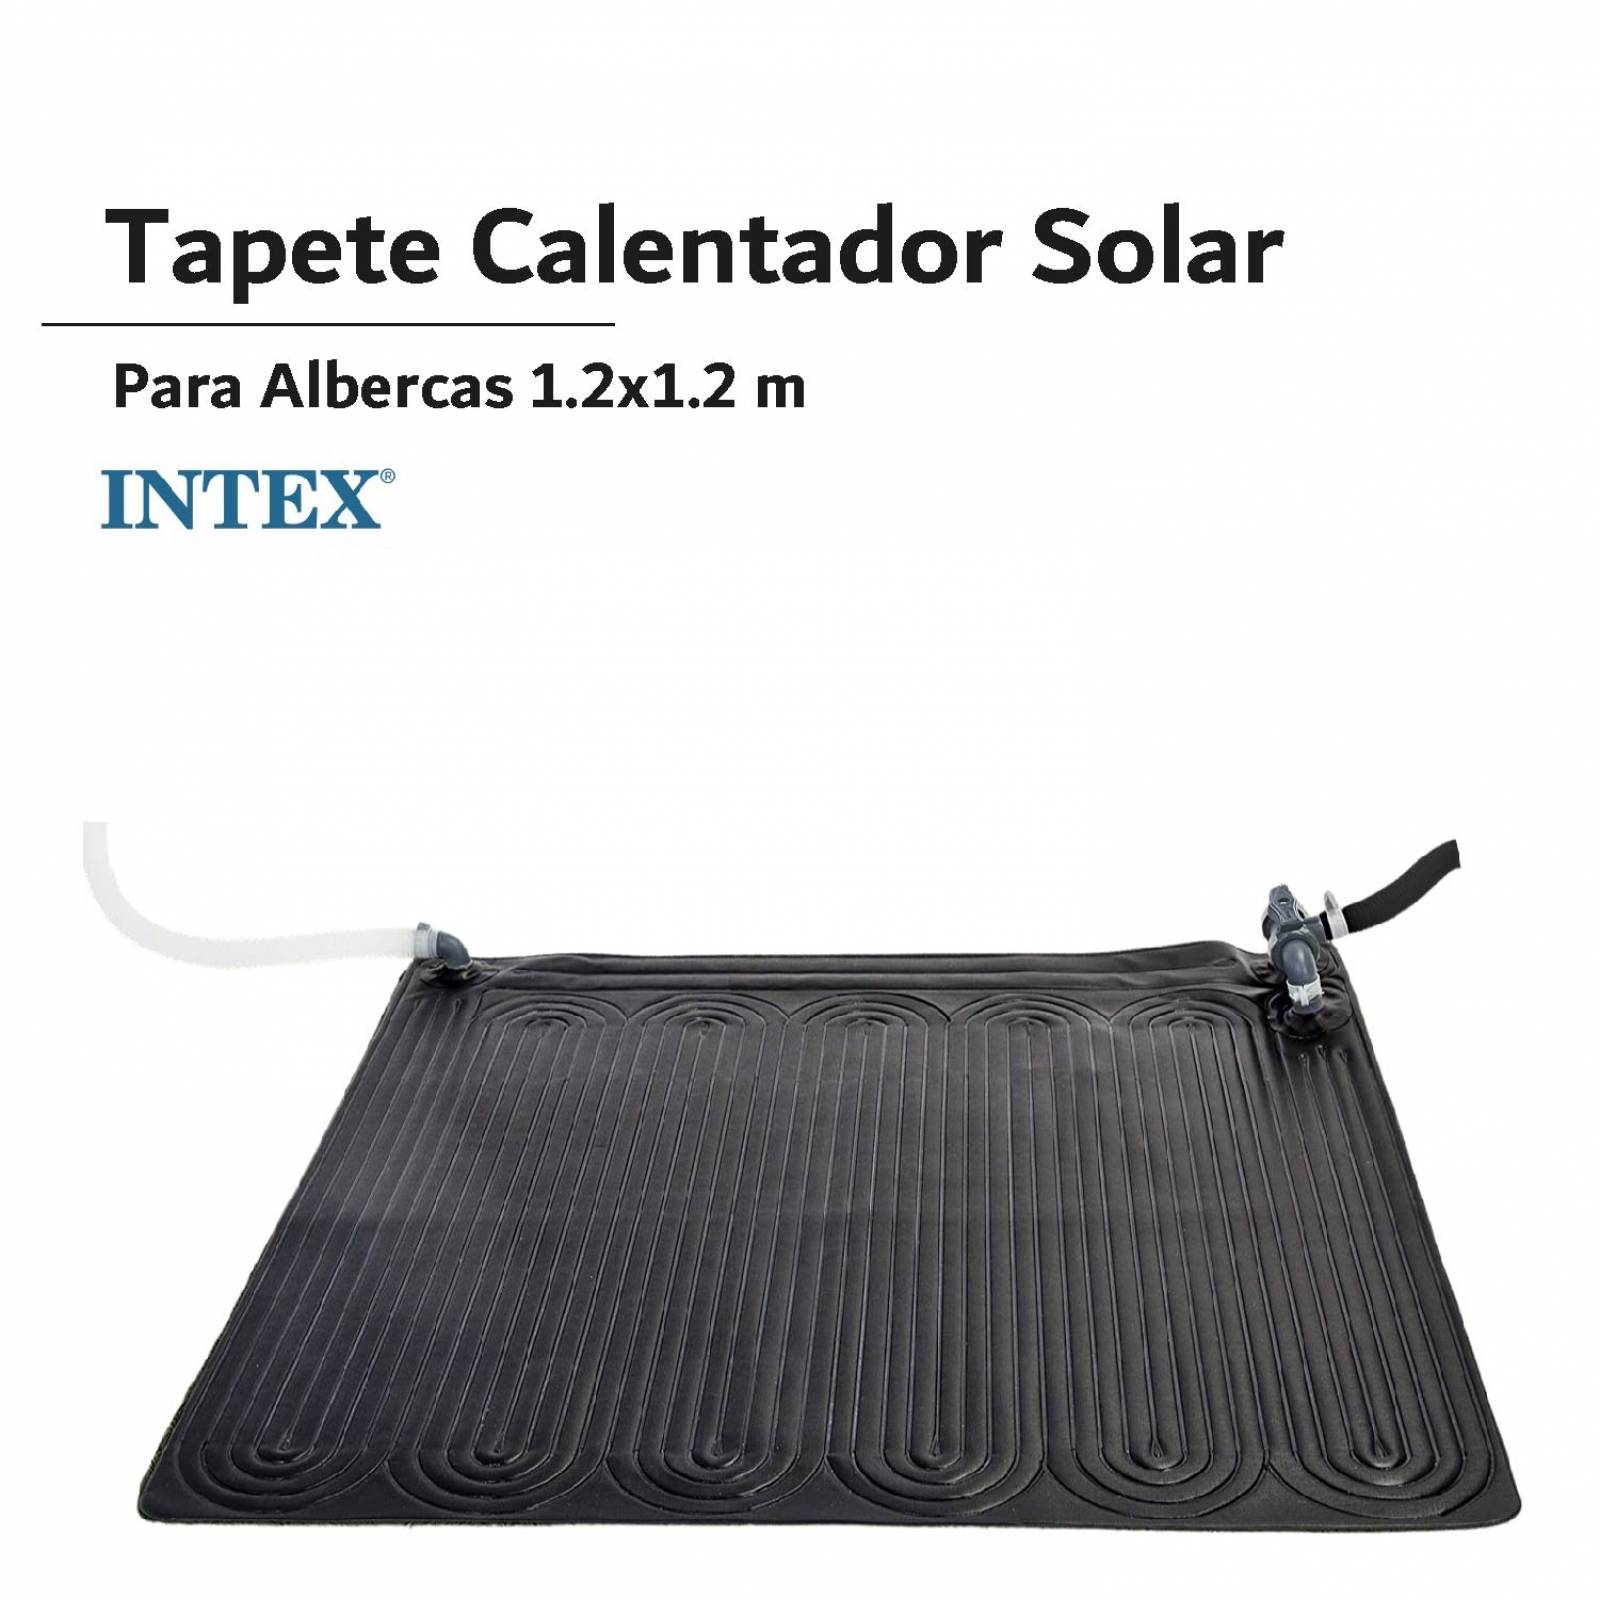 Tapete Calentador Solar 120 Cm Albercas Estructurales Intex 